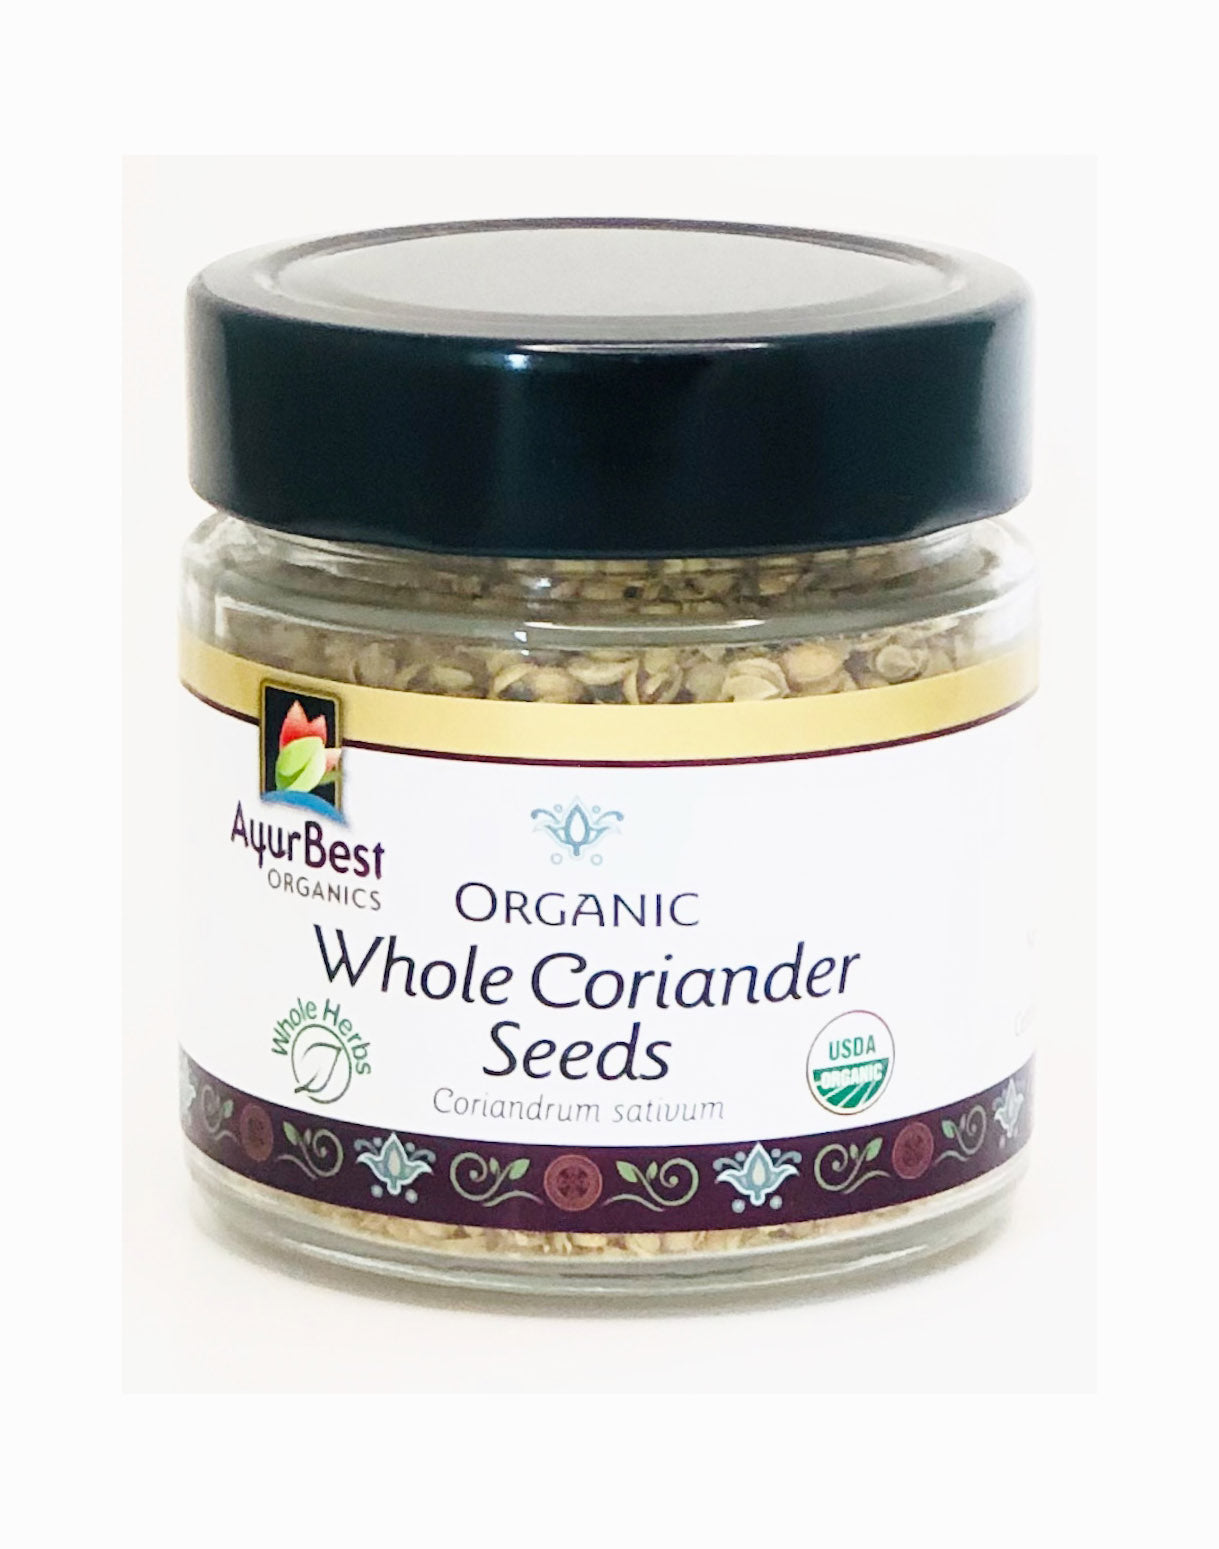 Wholesale Spices & Herbs - Coriander Seed Whole, Organic 2.3oz (65.4g) Jar